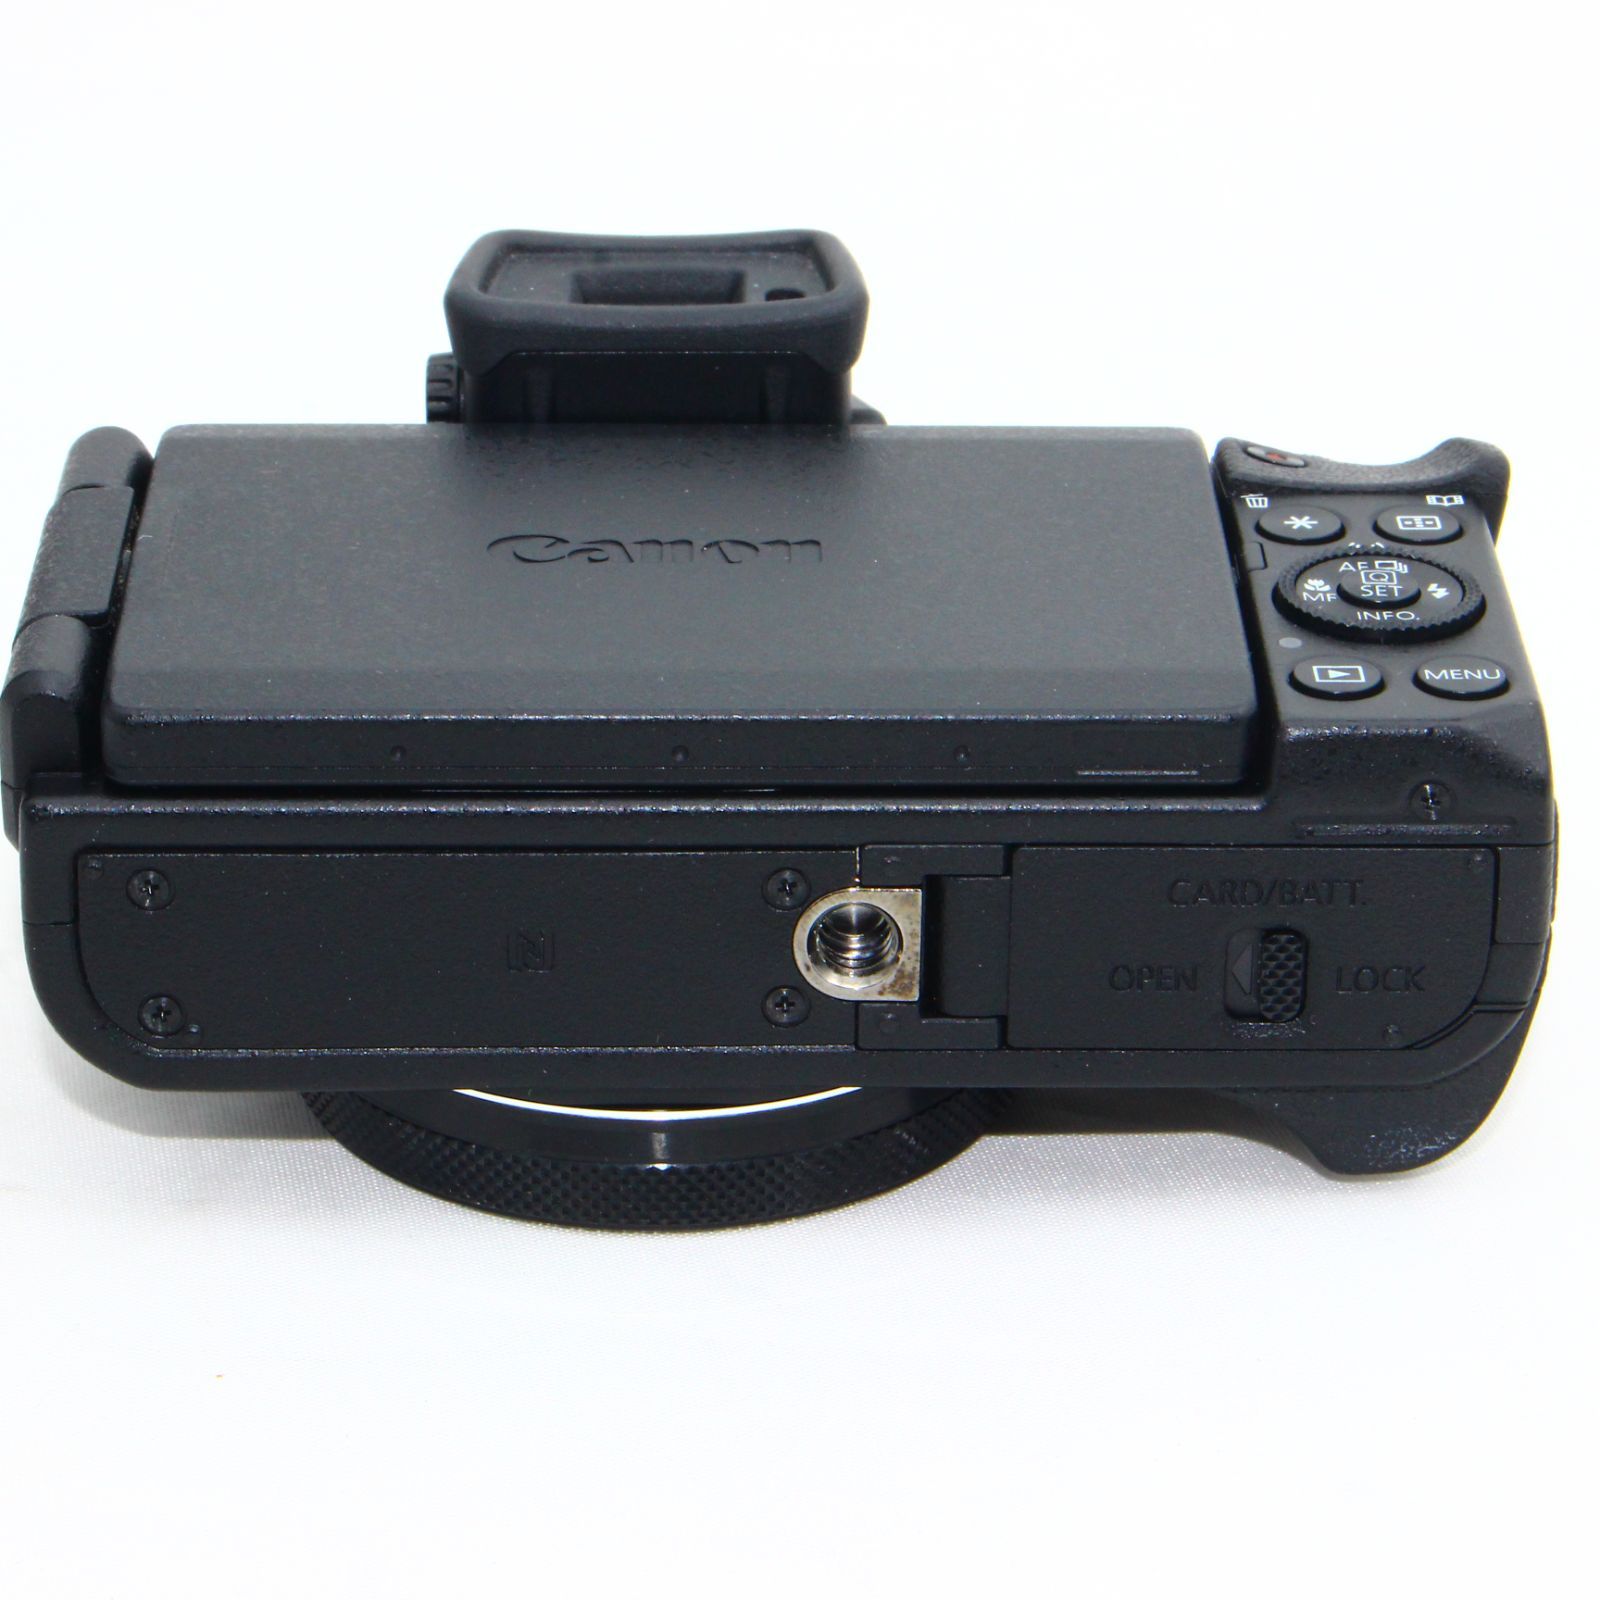 Canon デジタルカメラ PowerShot G5 X 光学4.2倍ズーム 1.0型センサー PSG5X